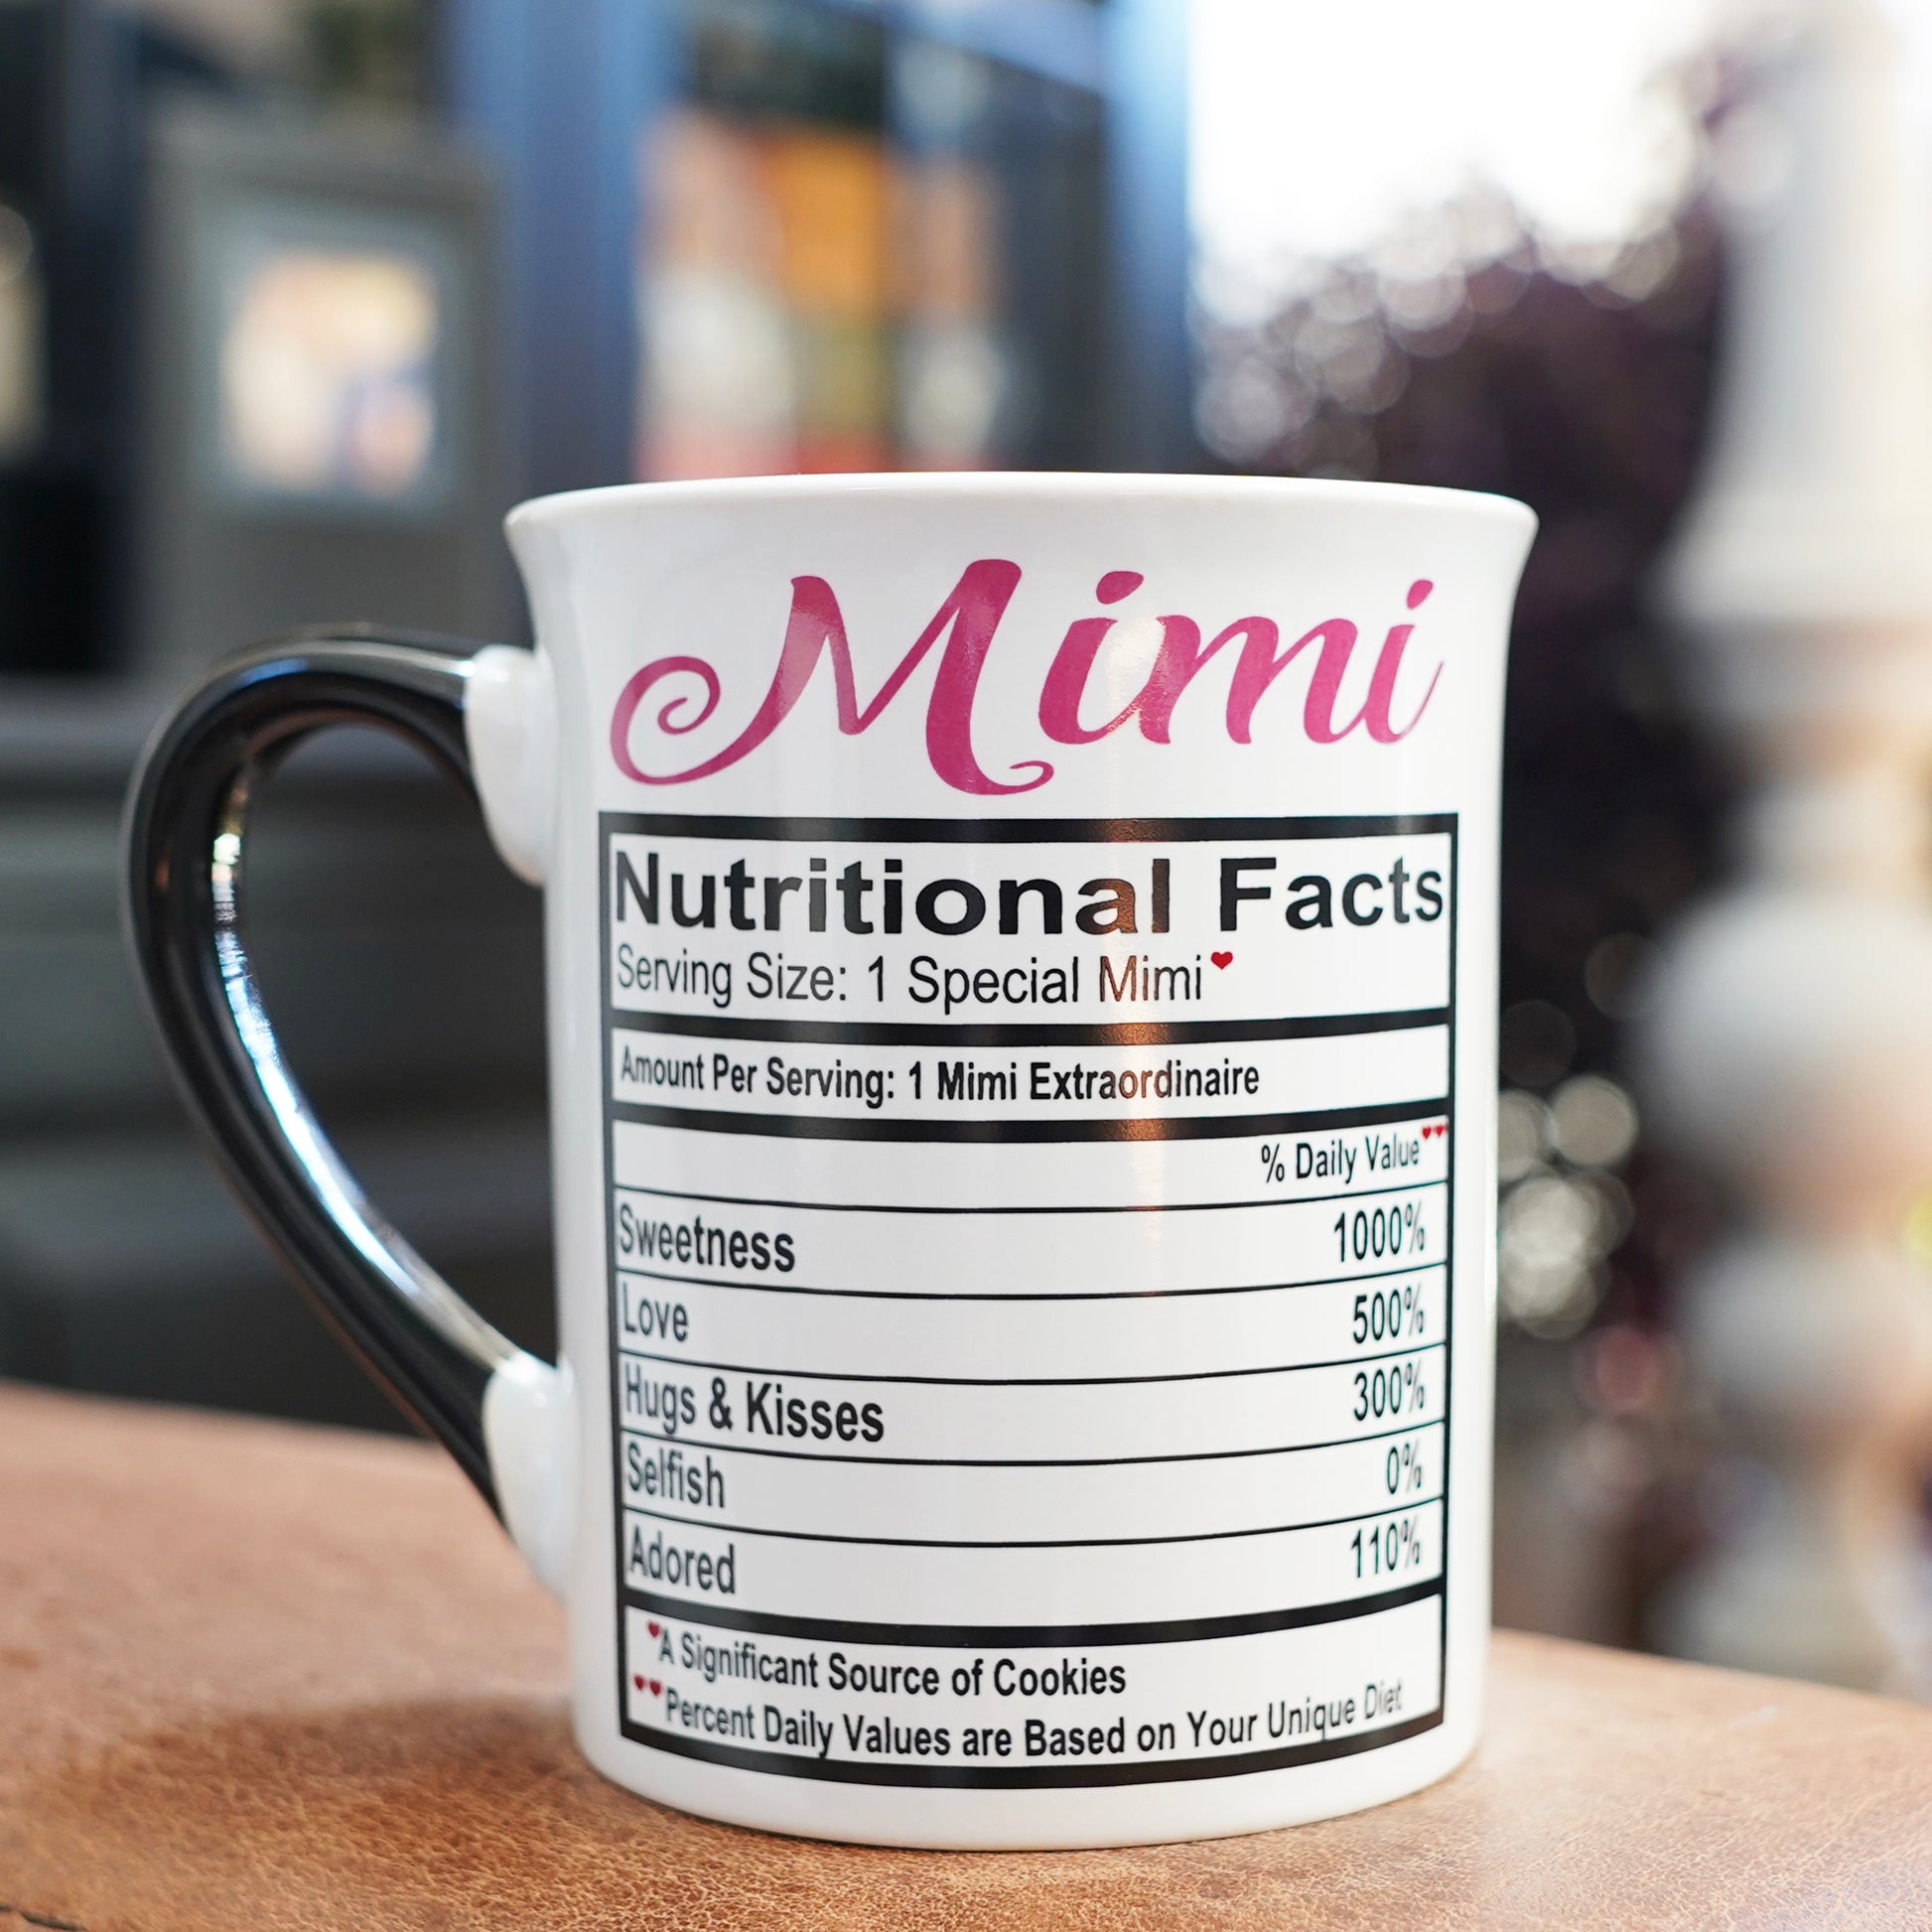 Mom Nutrition Facts - Funny Coffee Mug